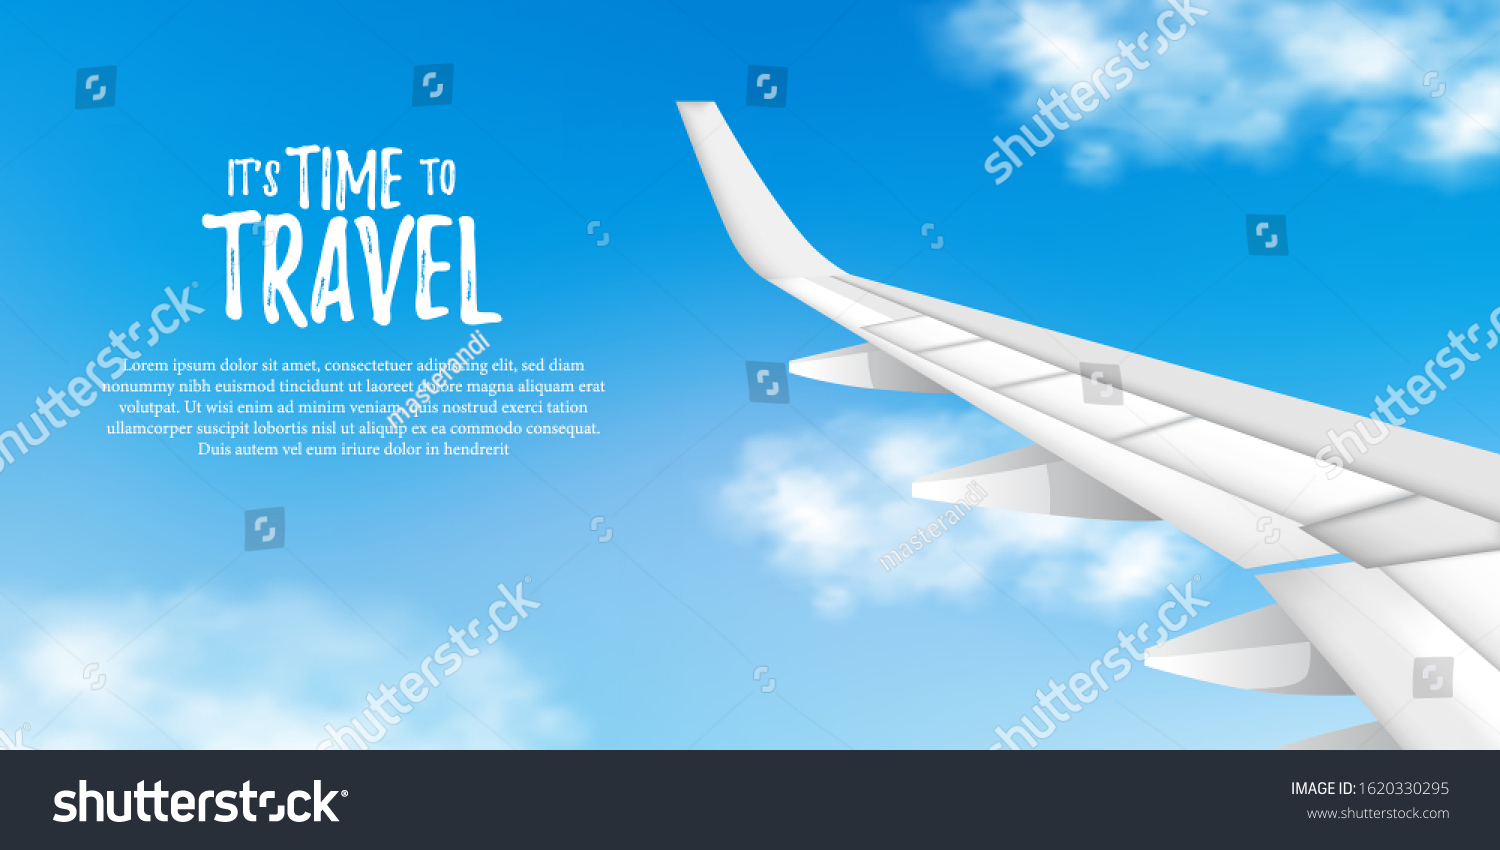 Ad plane Images, Stock Photos & Vectors | Shutterstock